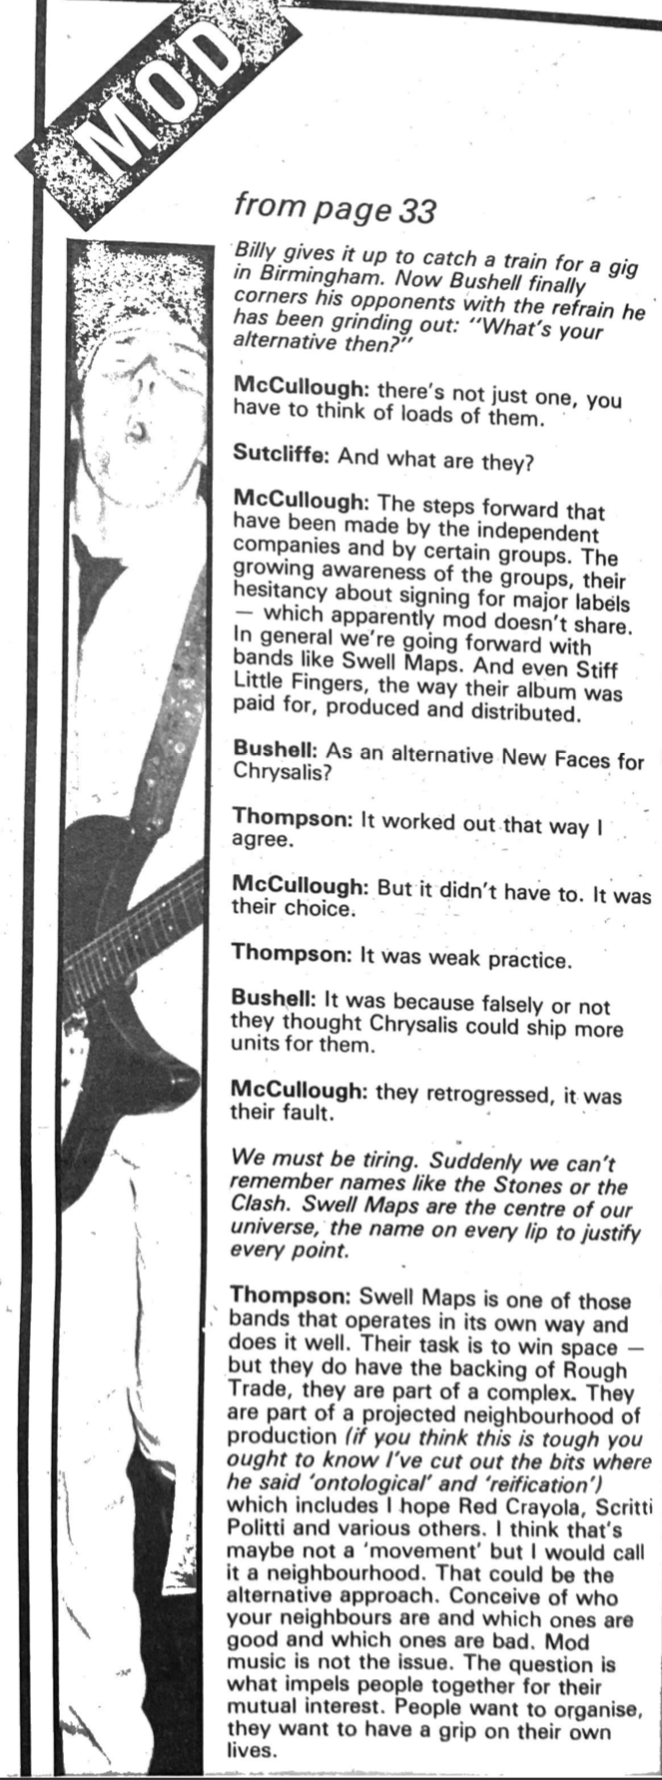 Anglozine Sounds Magazine November 1979 Mod revival